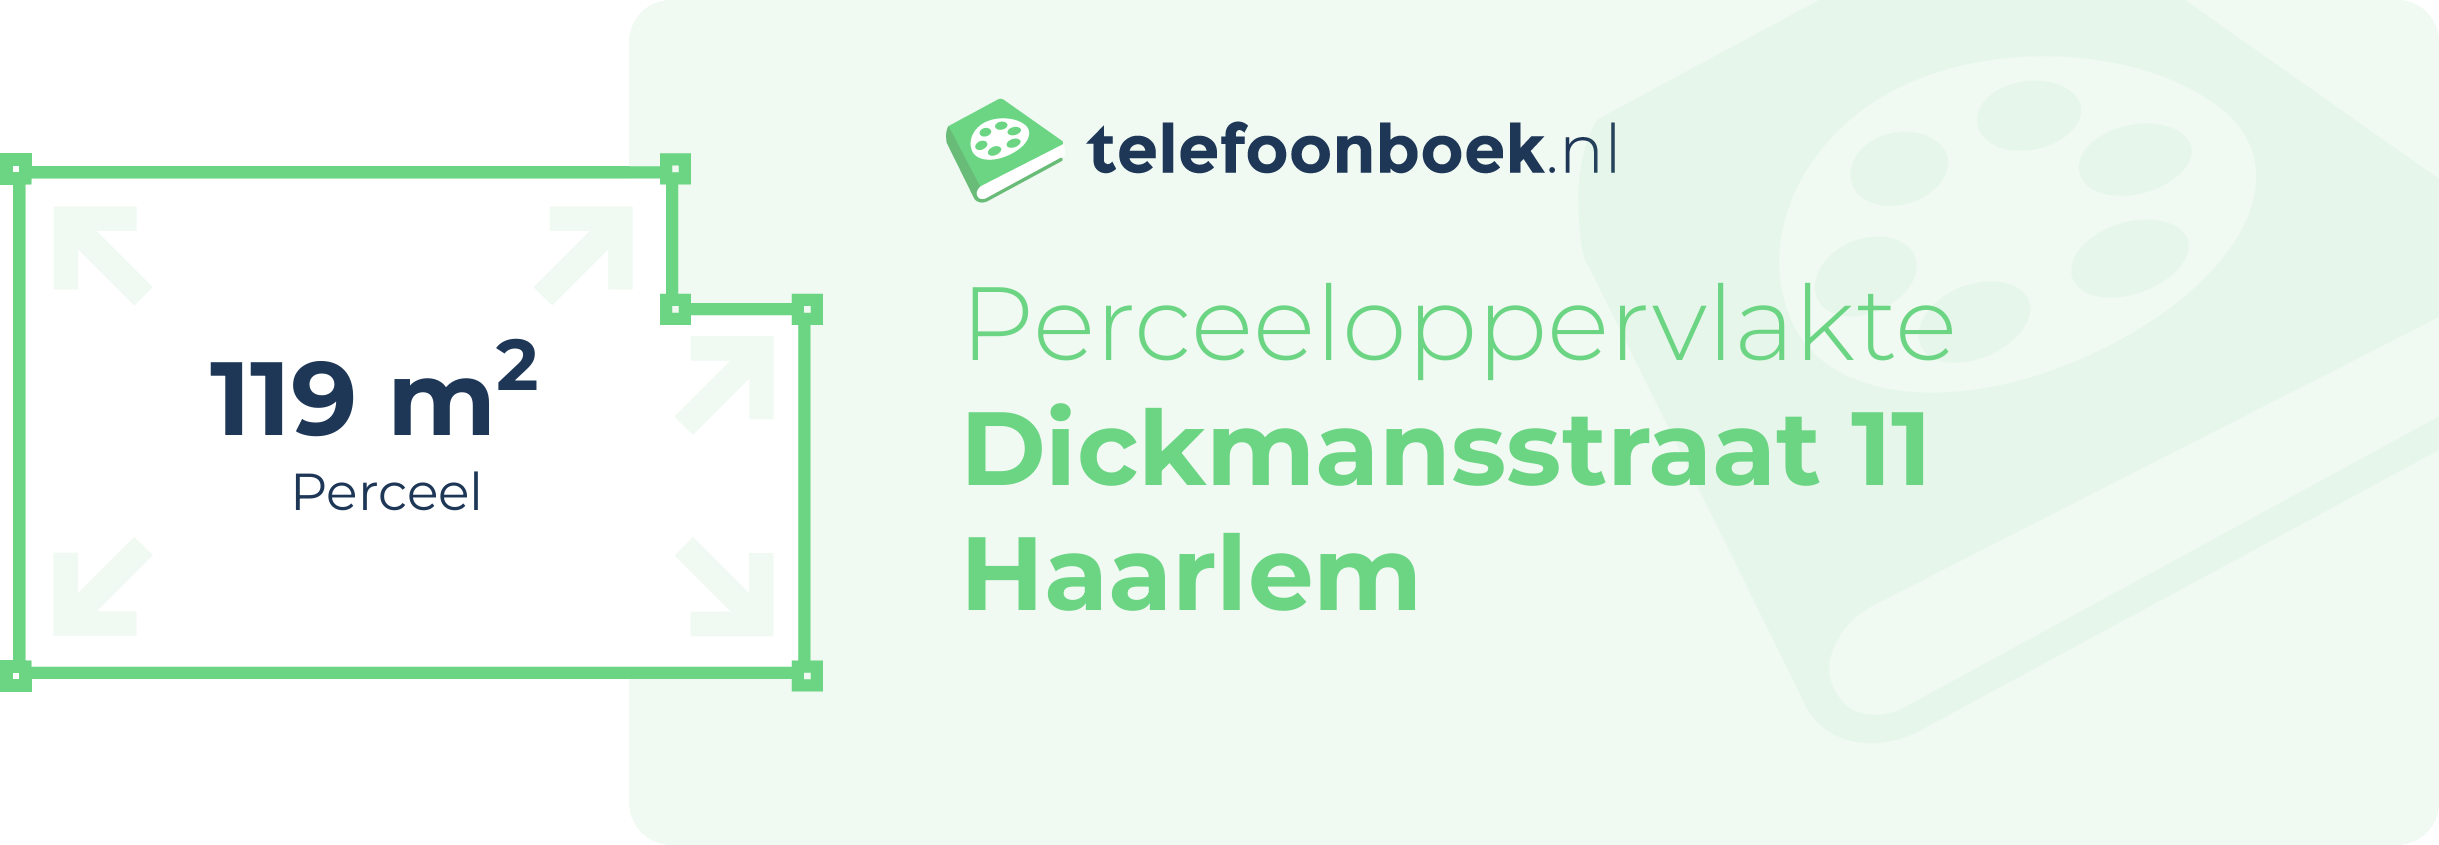 Perceeloppervlakte Dickmansstraat 11 Haarlem